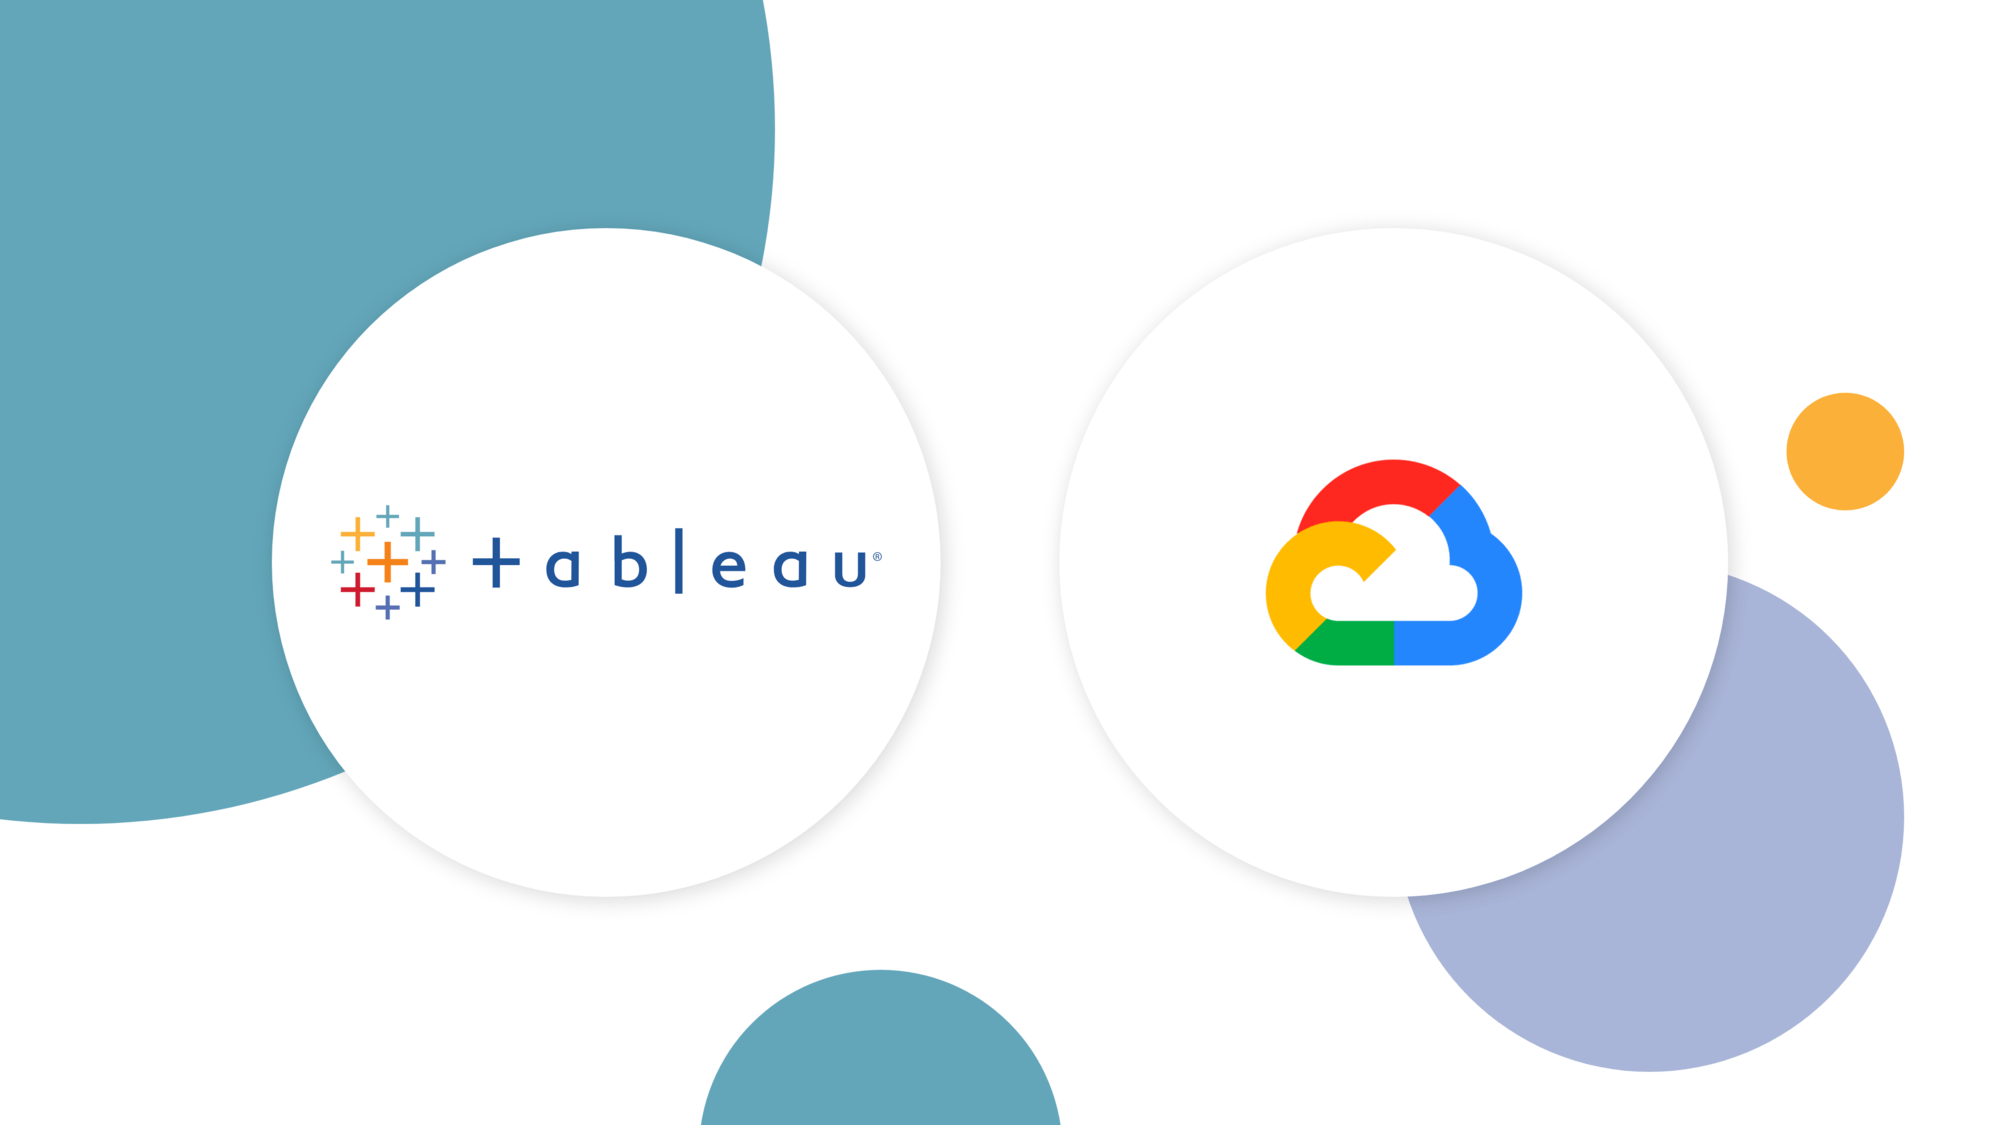 Tableau and Google Cloud